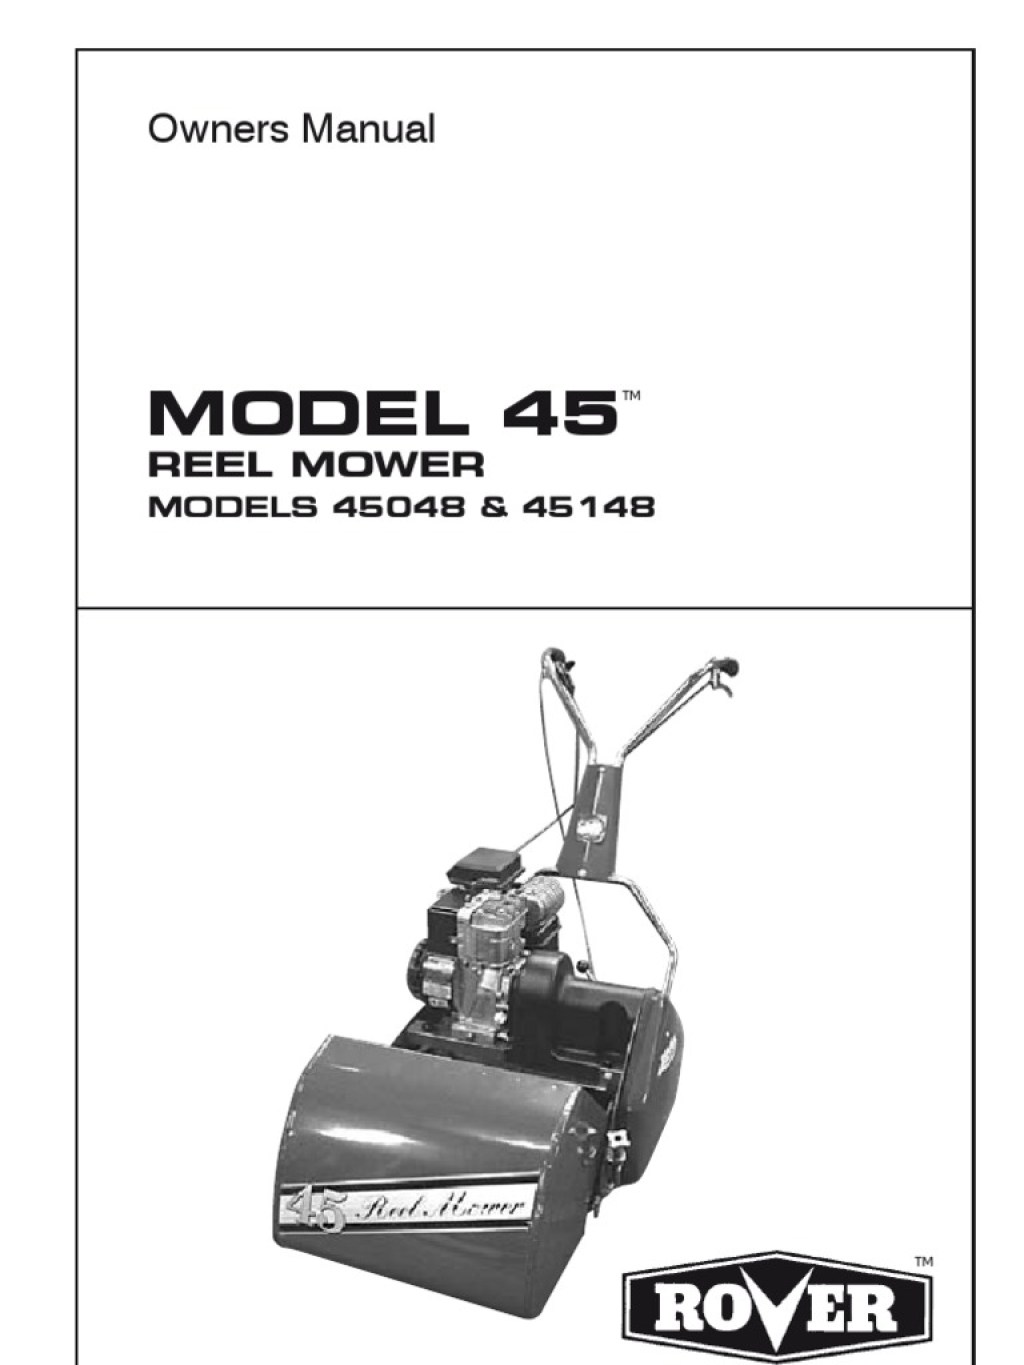 Picture of: Scott Bonnar  Owners Manual S-I  PDF  Mower  Clutch